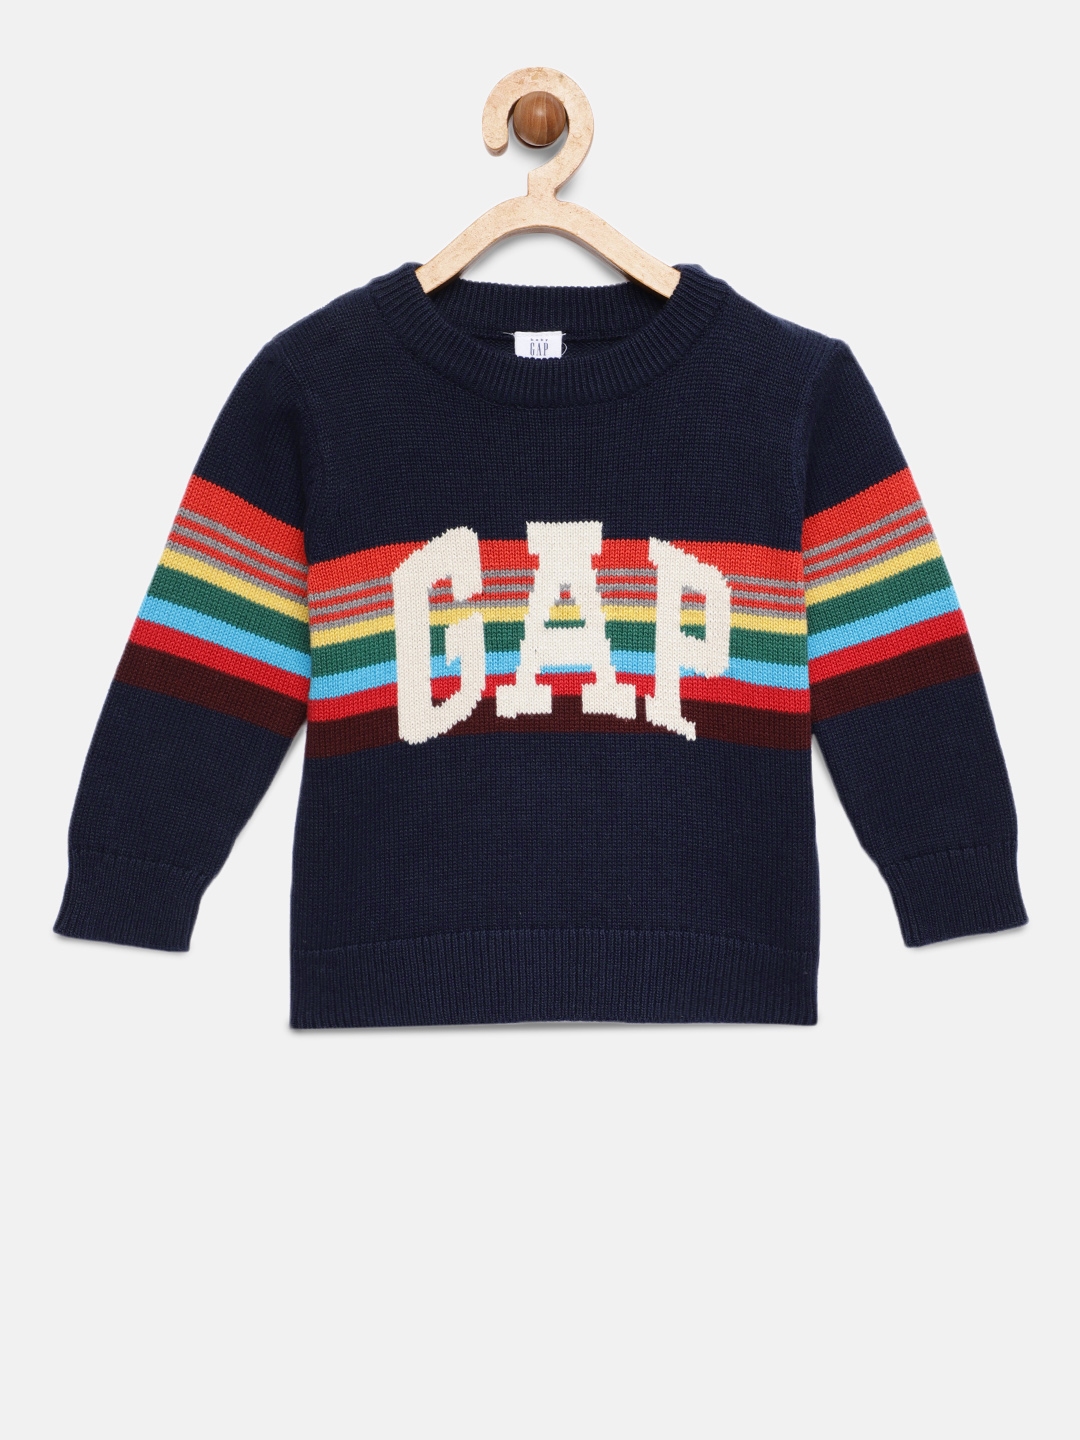 gap navy sweater